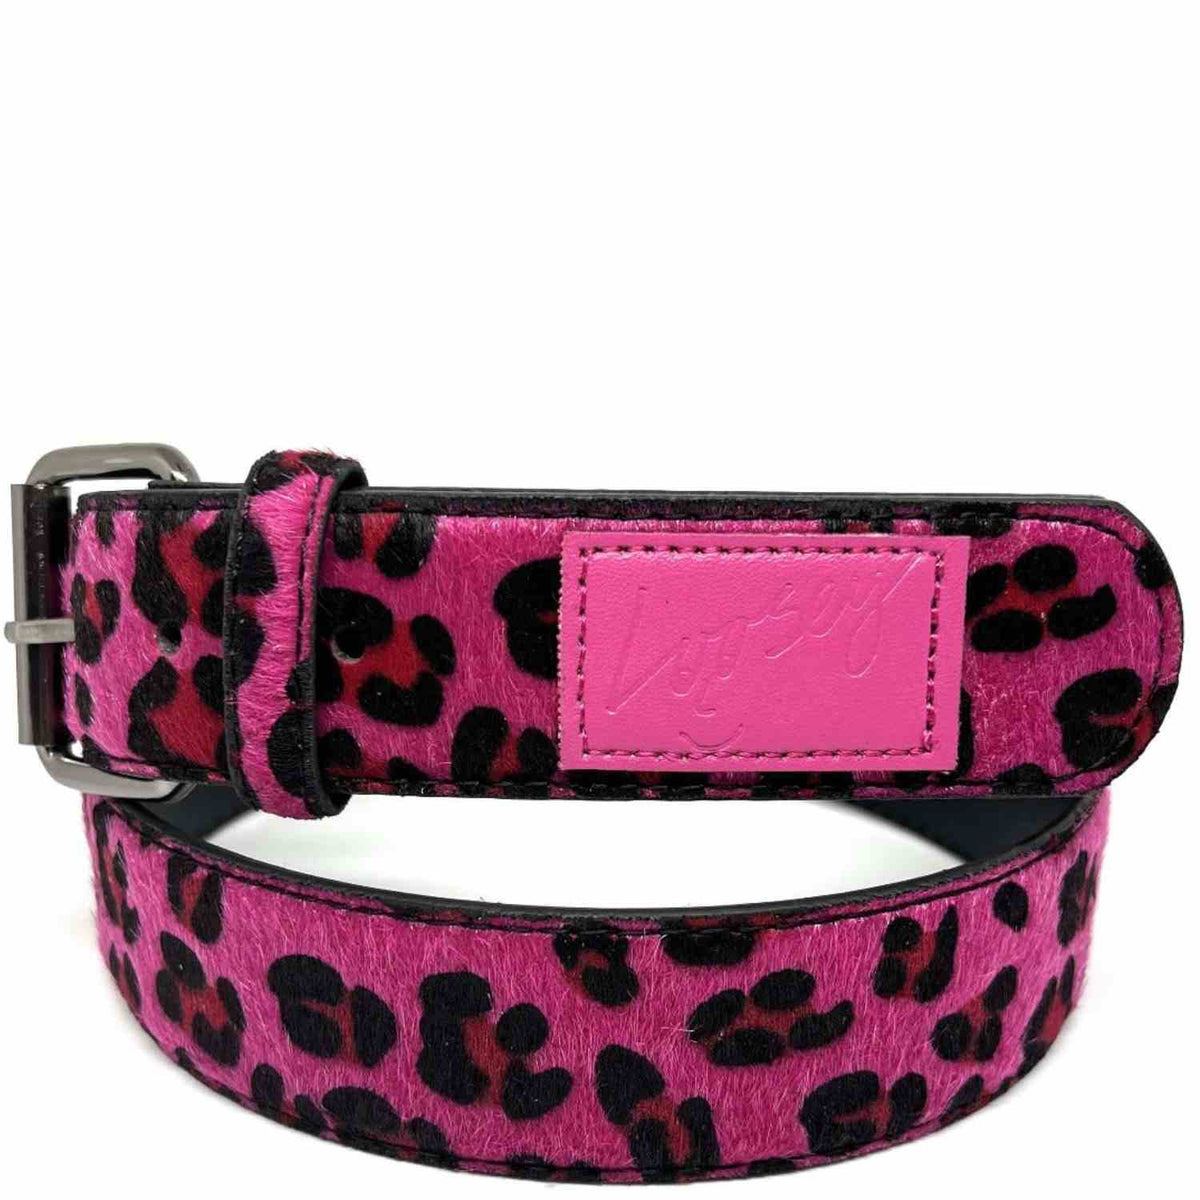 Loosey Belt - Pink Cheetah